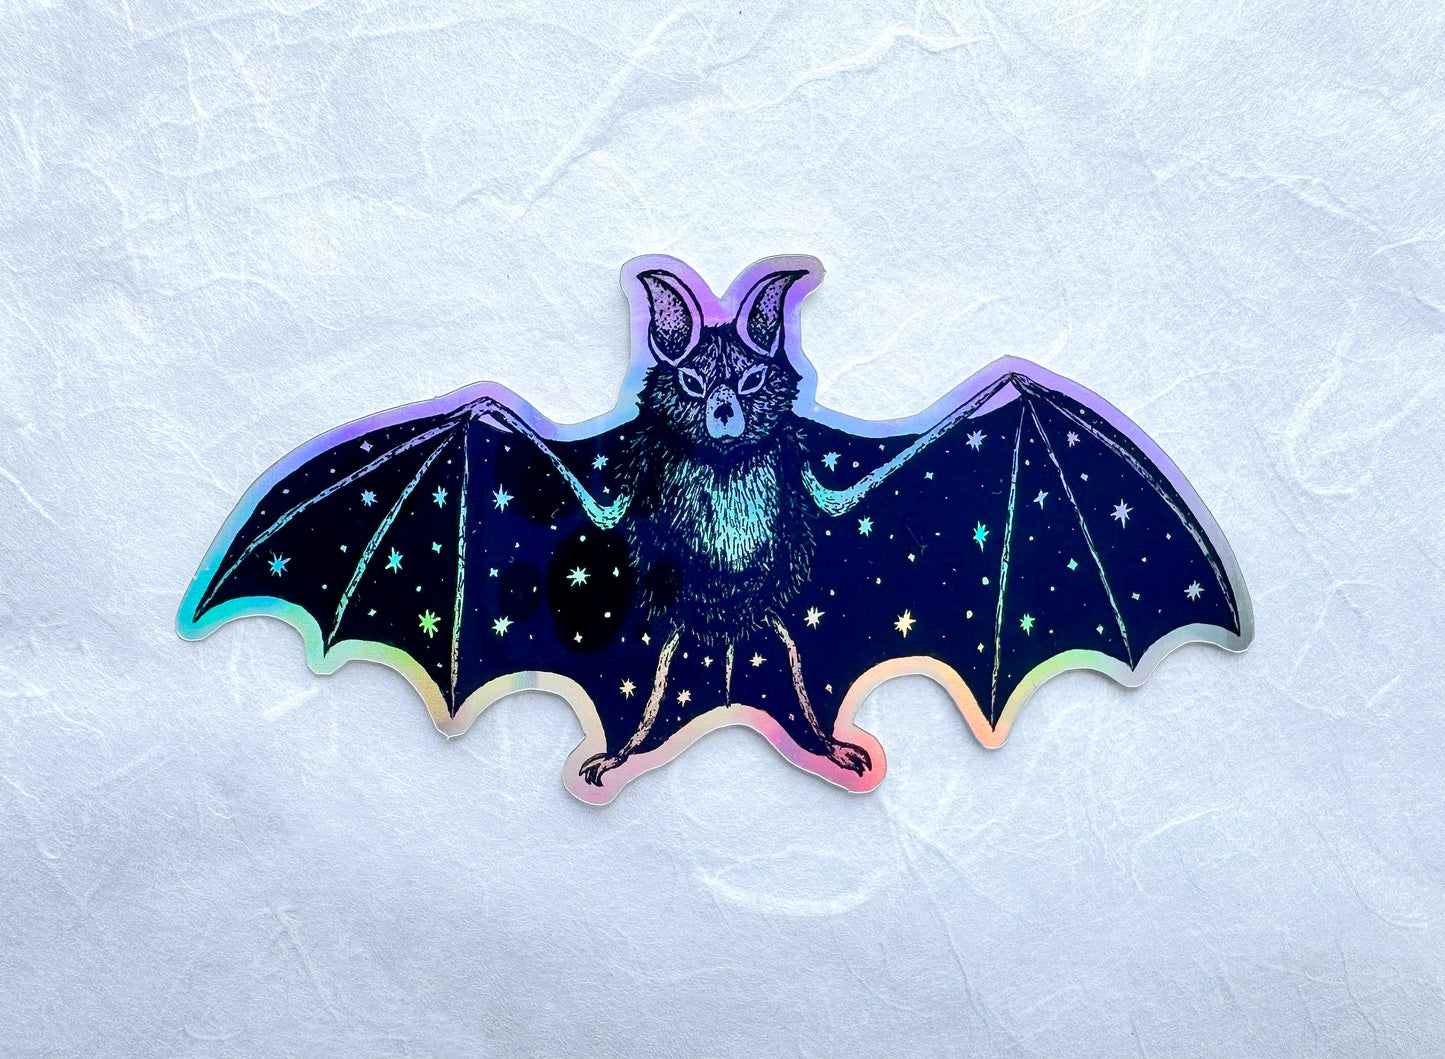 Holographic Bat Sticker